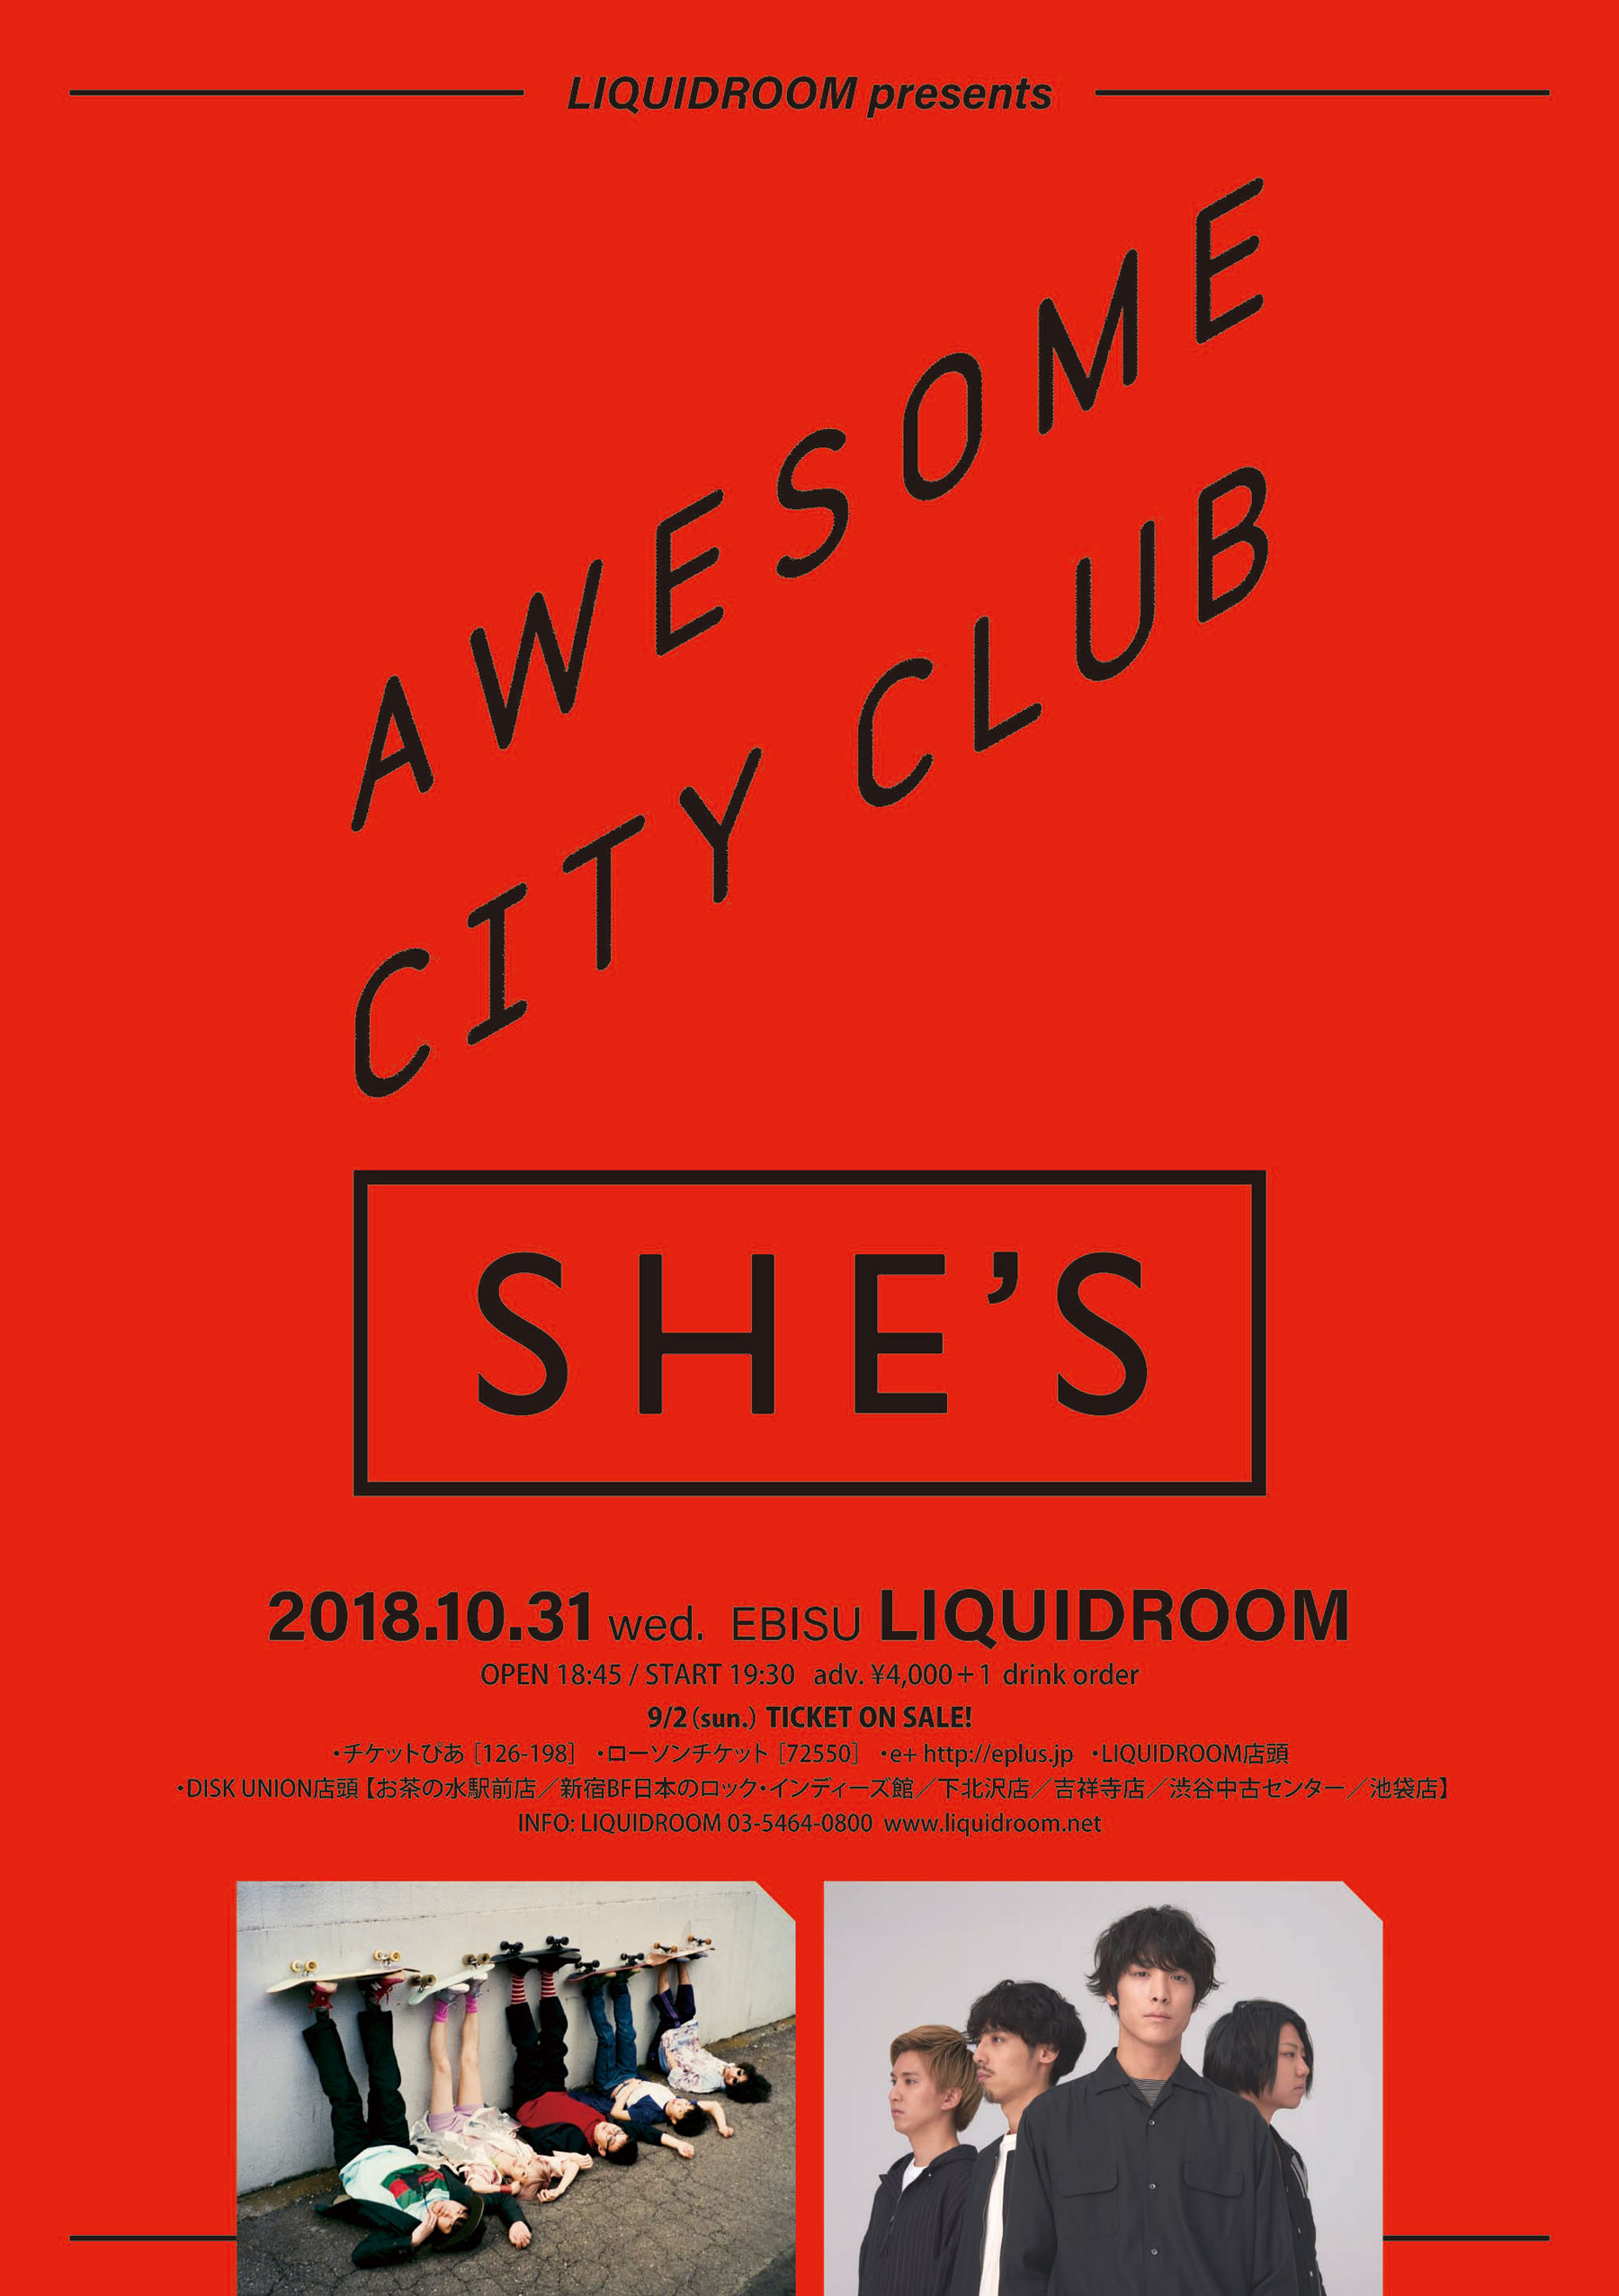 LIQUIDROOM presents Awesome City Club x SHE’S